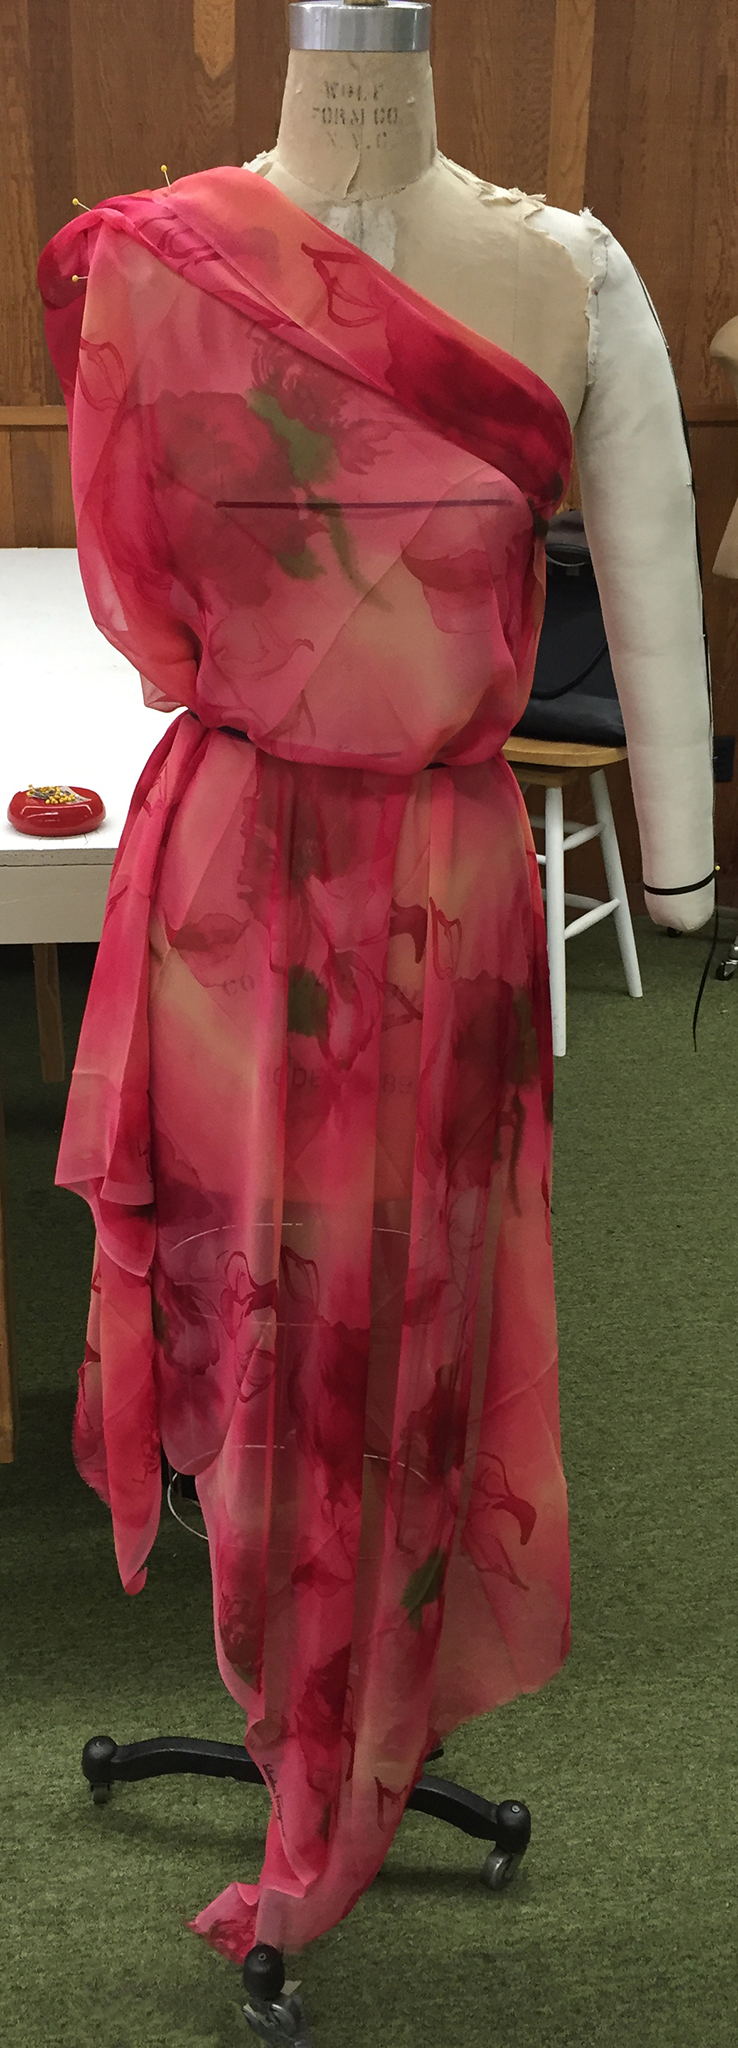 Pink floral silk chiffon draped over a dress form.